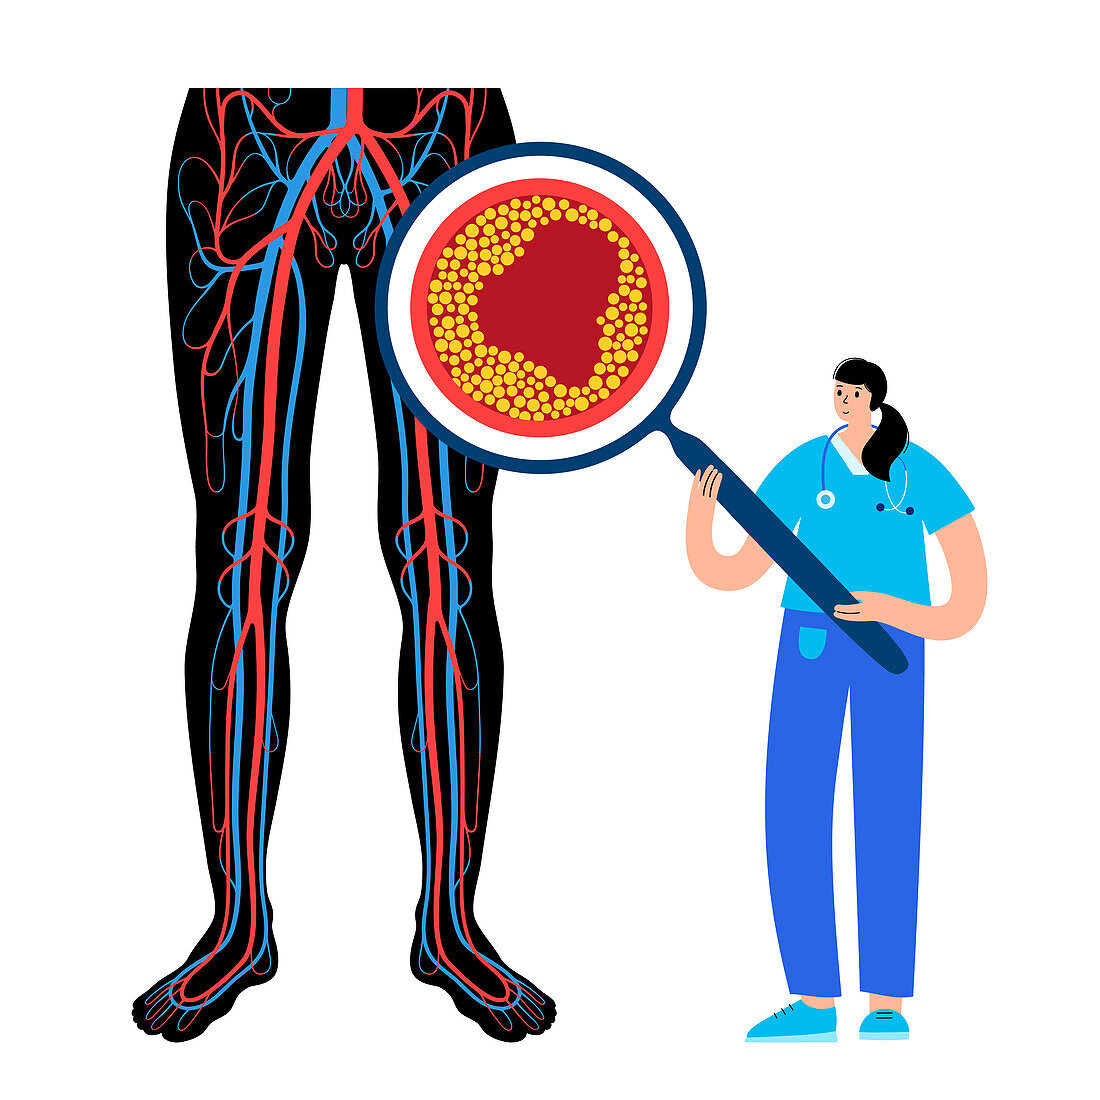 Peripheral artery disease, illustration